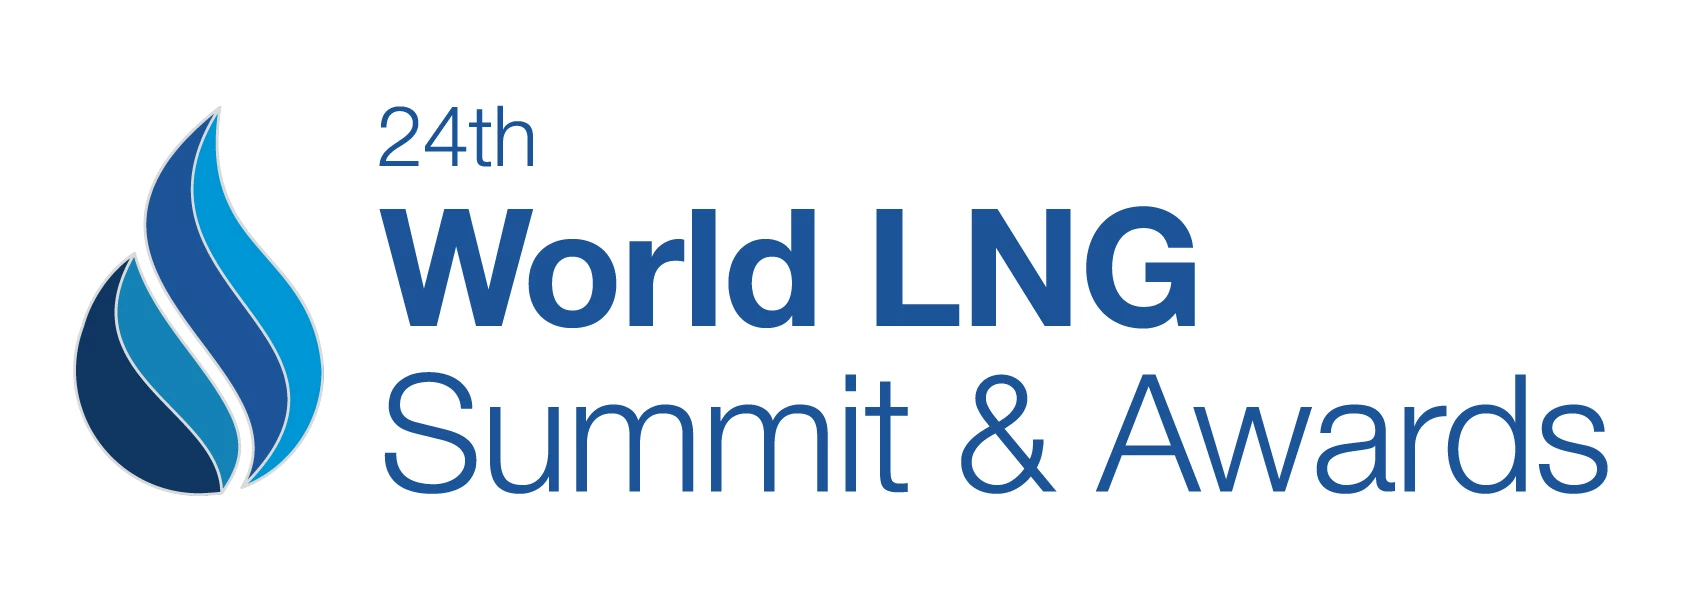 WORLD LNG SUMMIT & AWARDS